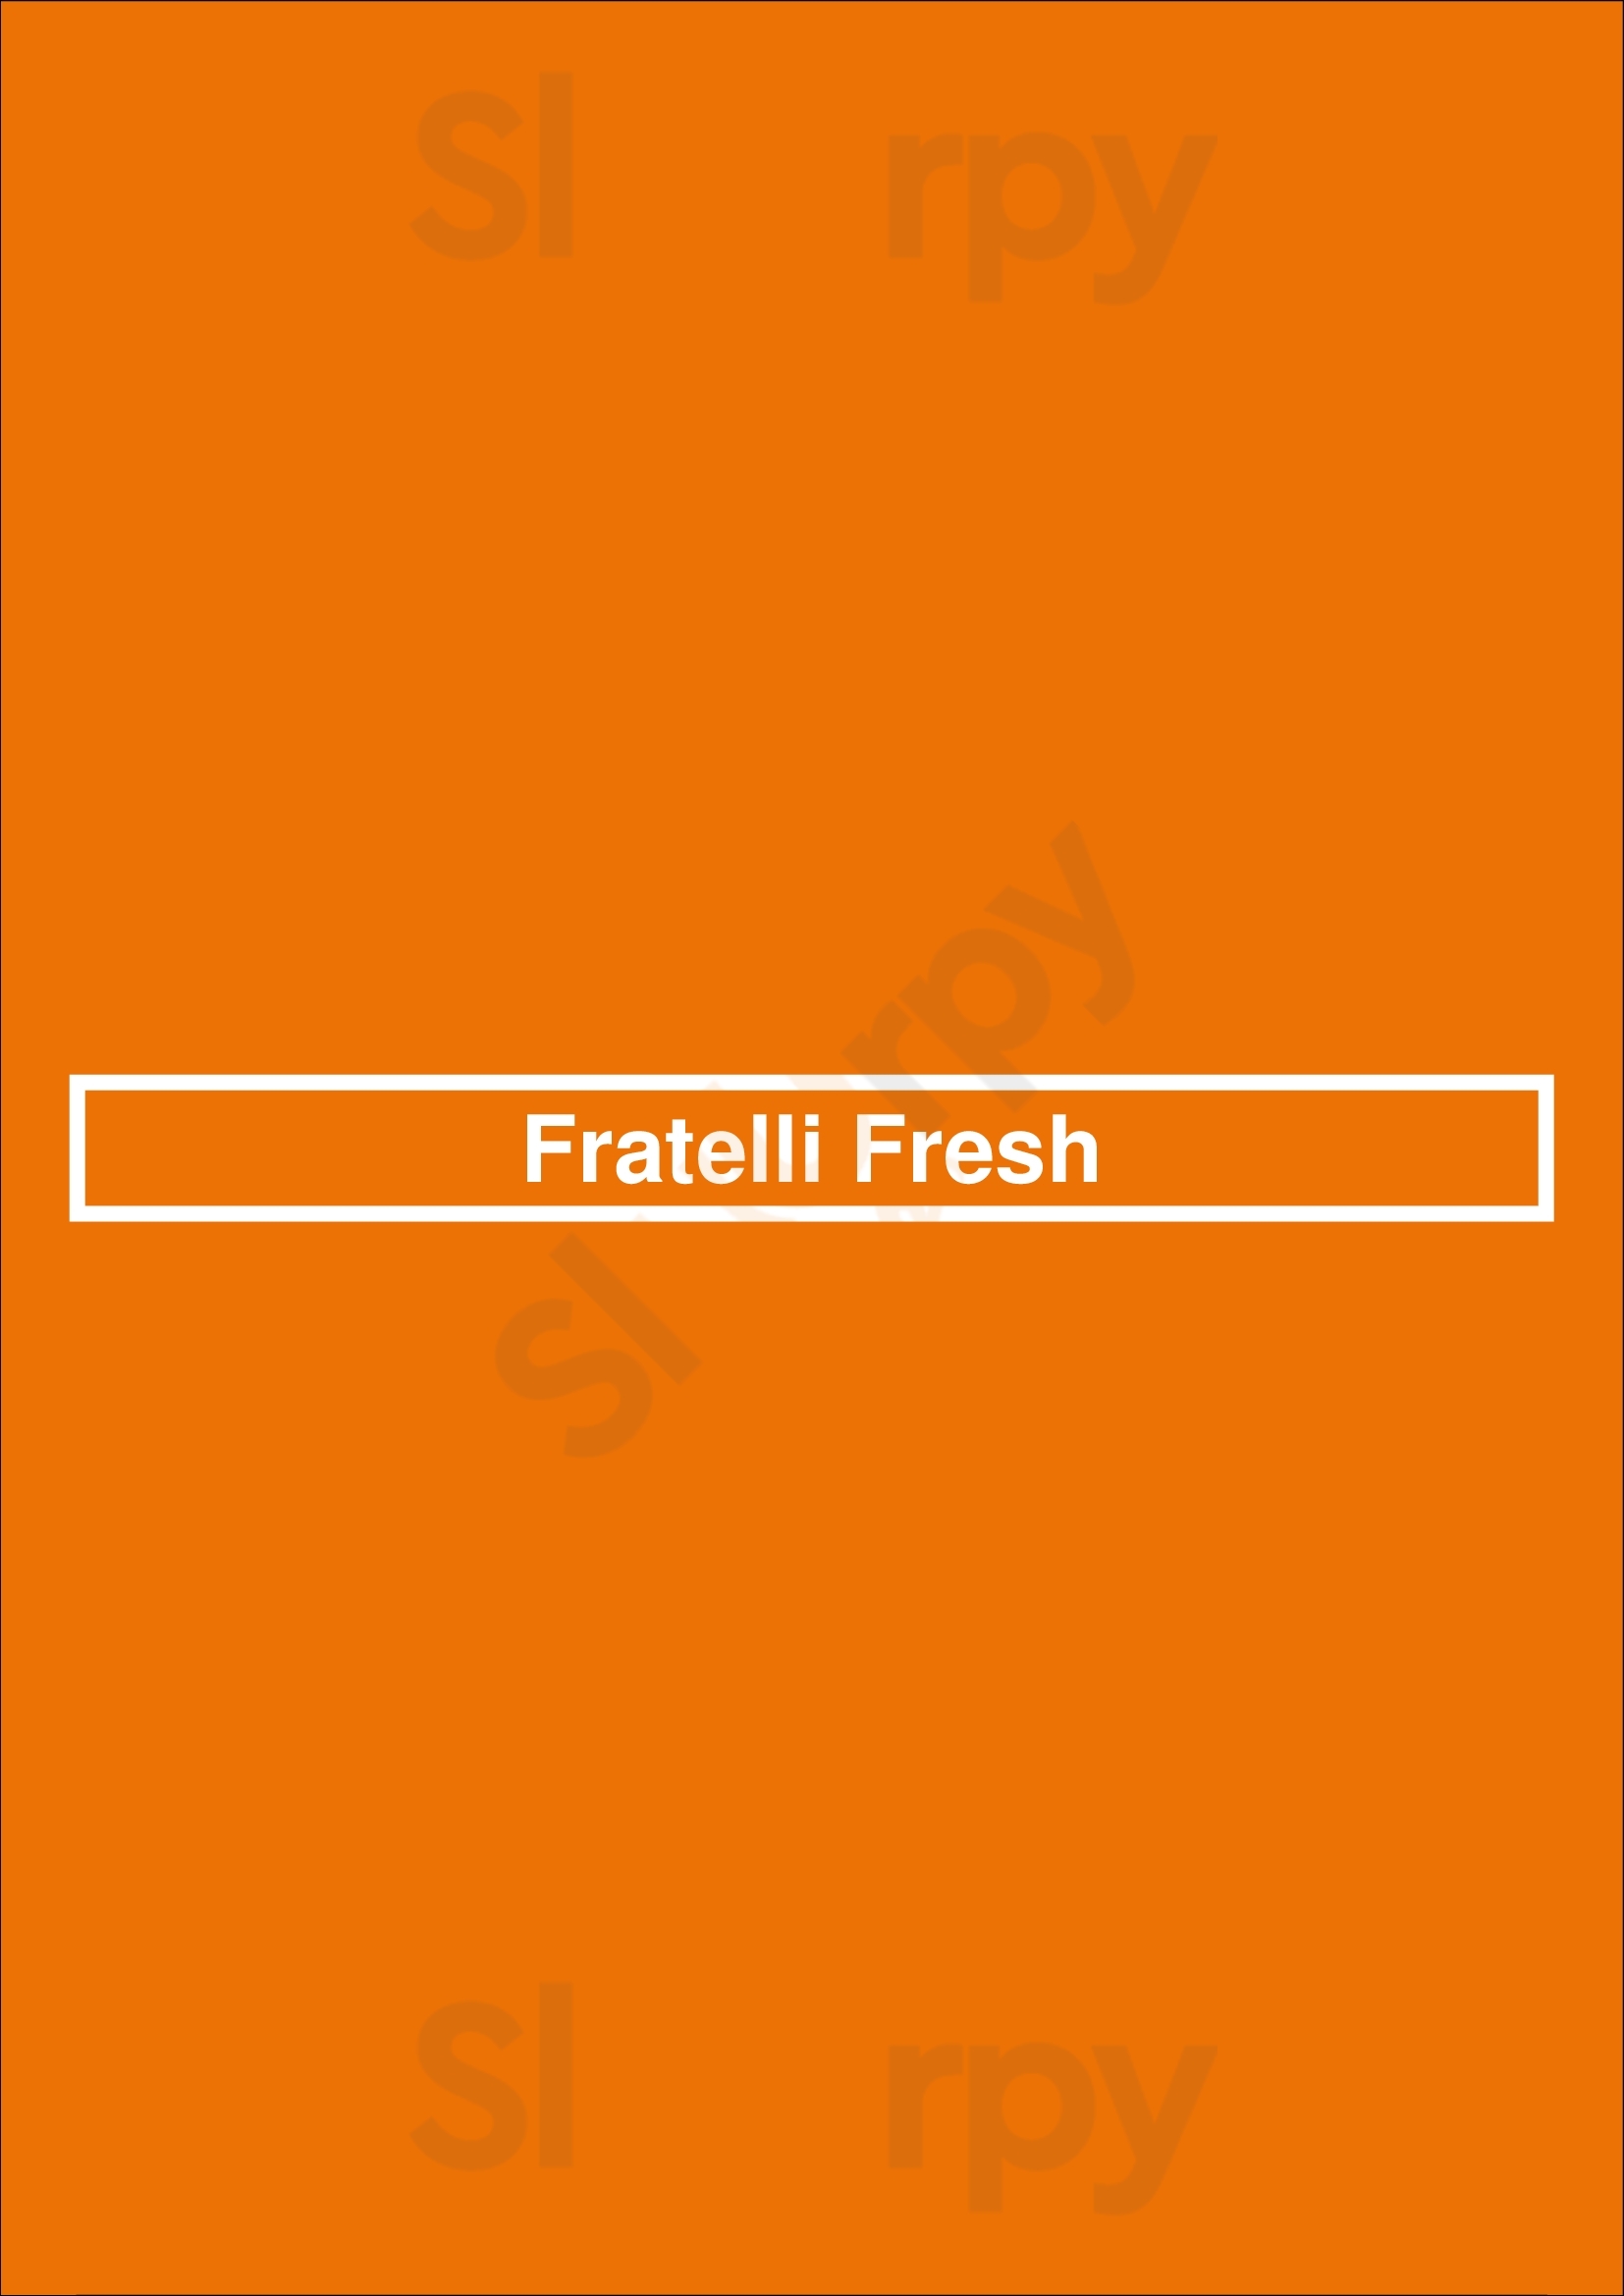 Fratelli Fresh Sydney Menu - 1